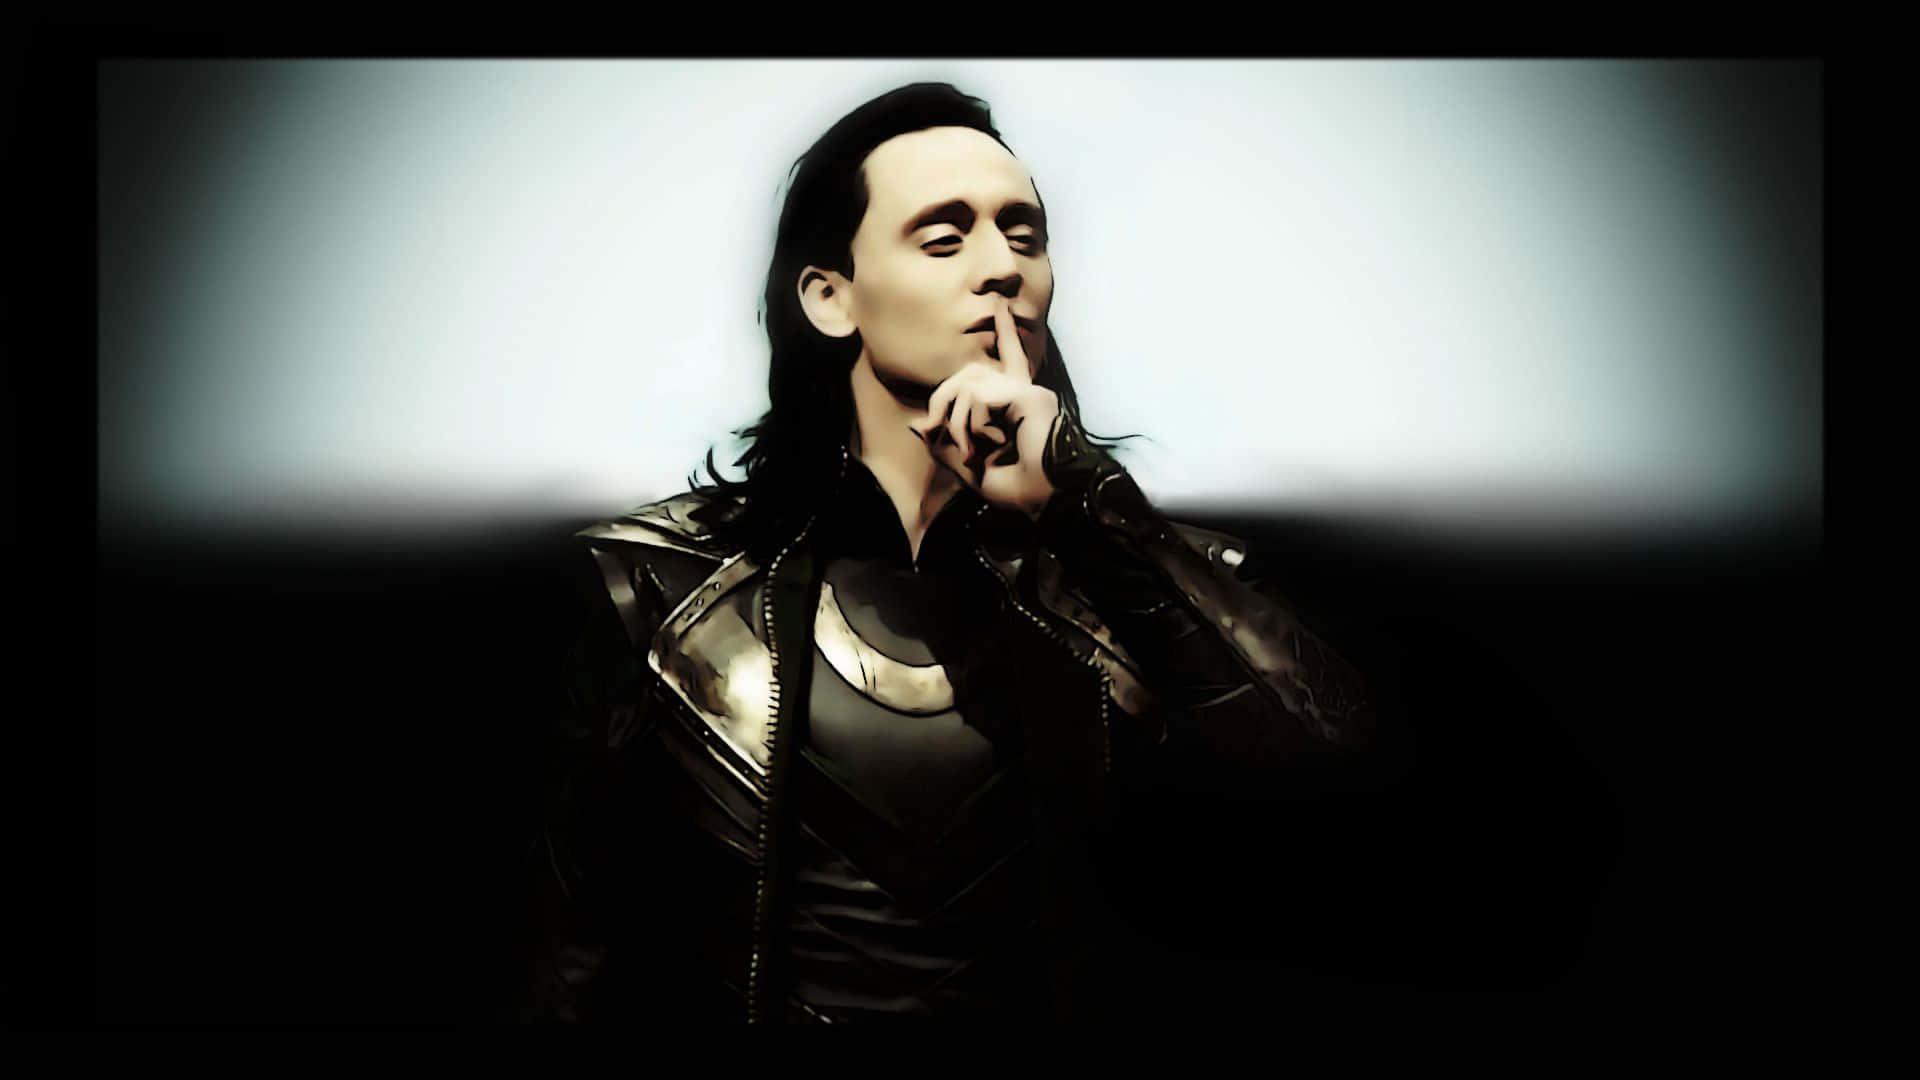 Loki, the mischievous marvel character